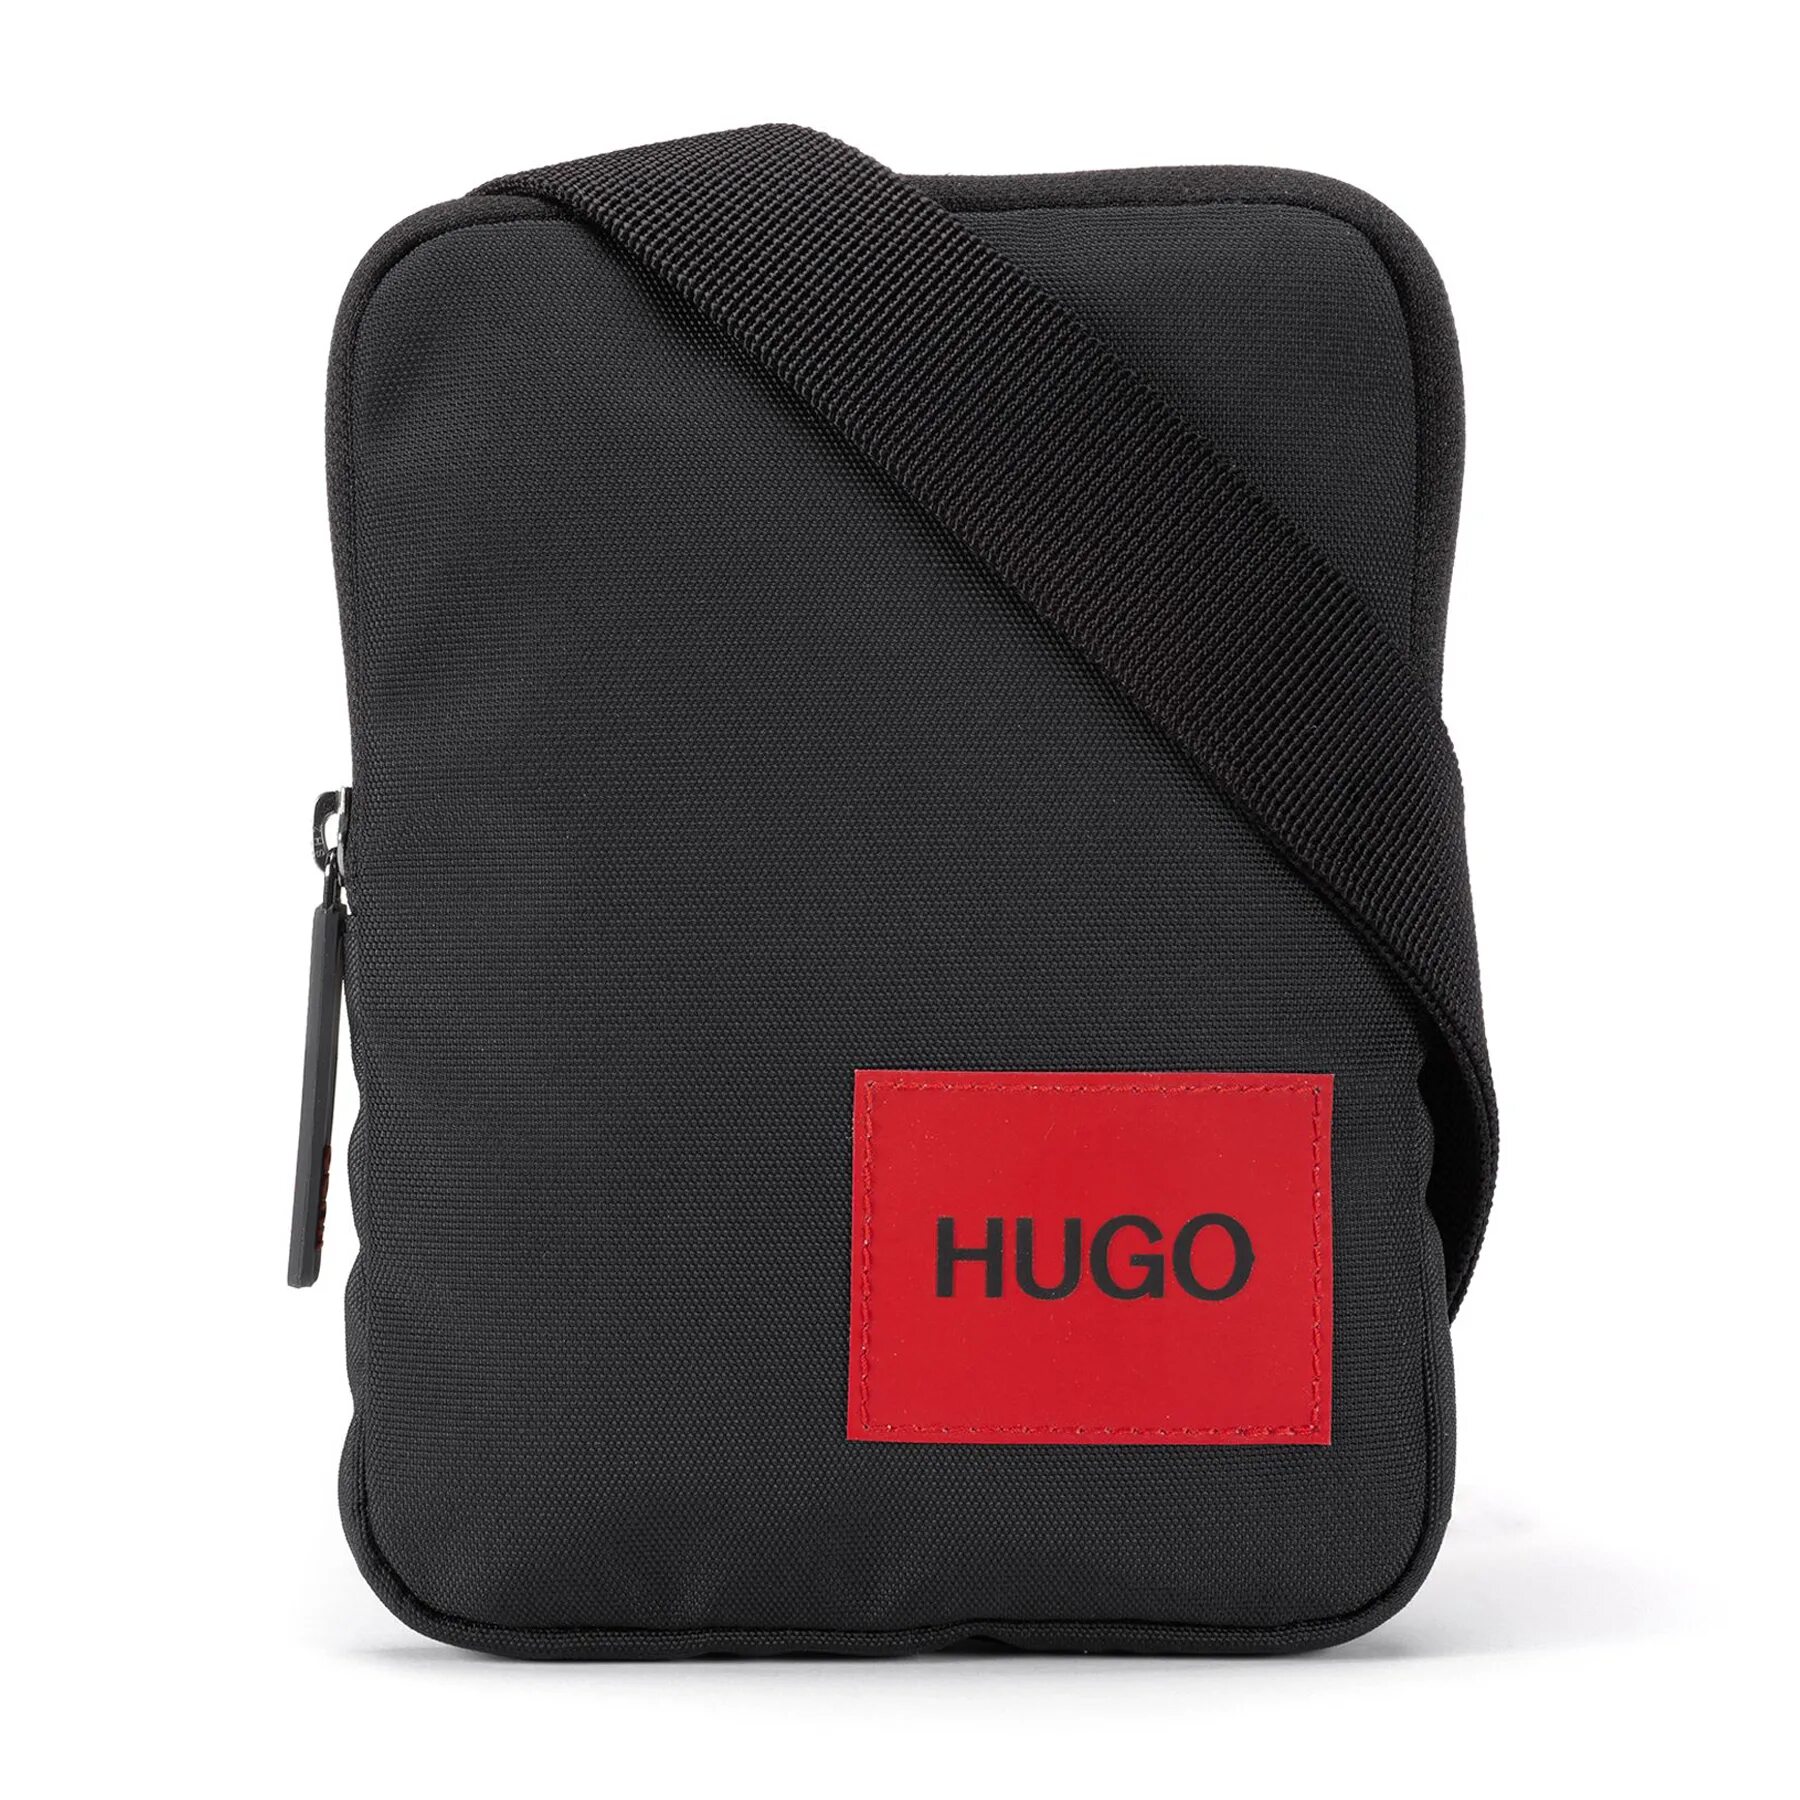 Сумка Хуго босс. Hugo Boss Reporter Bag. Hugo Ethon сумка. Сумка Хуго босс мужская. Сумка мужская hugo